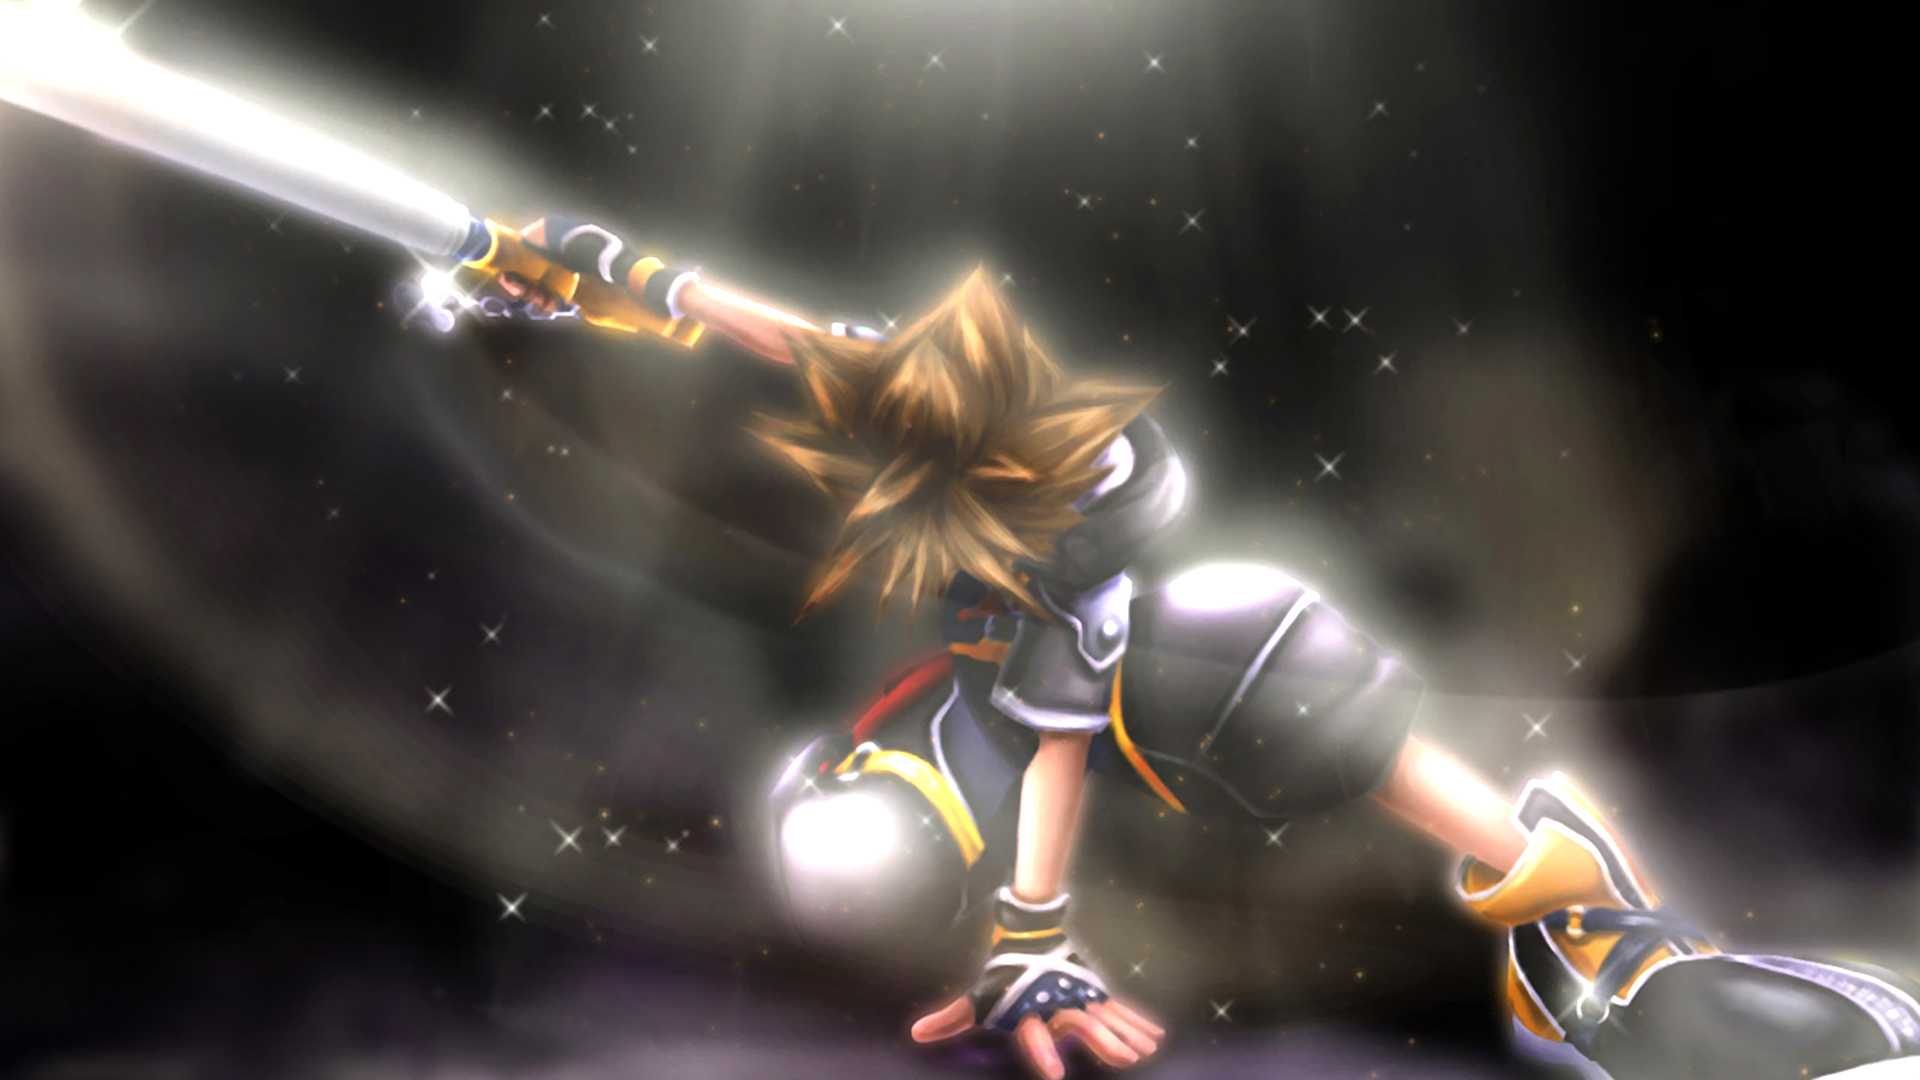 Kingdom Hearts Wallpaper HD Image Background Media File For Mobile